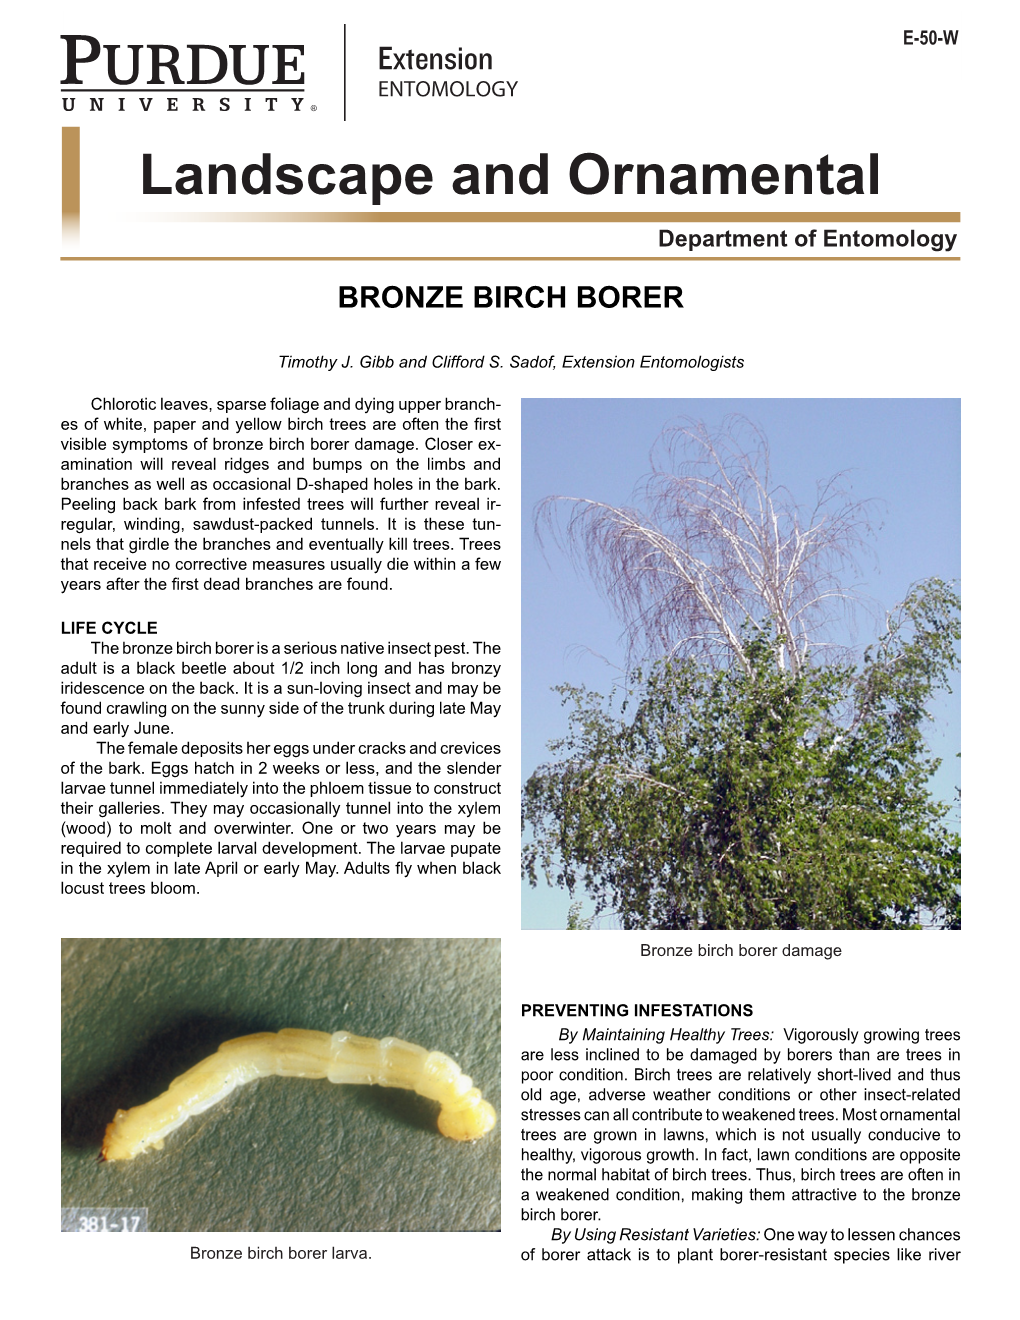 Landscape and Ornamental Department of Entomology